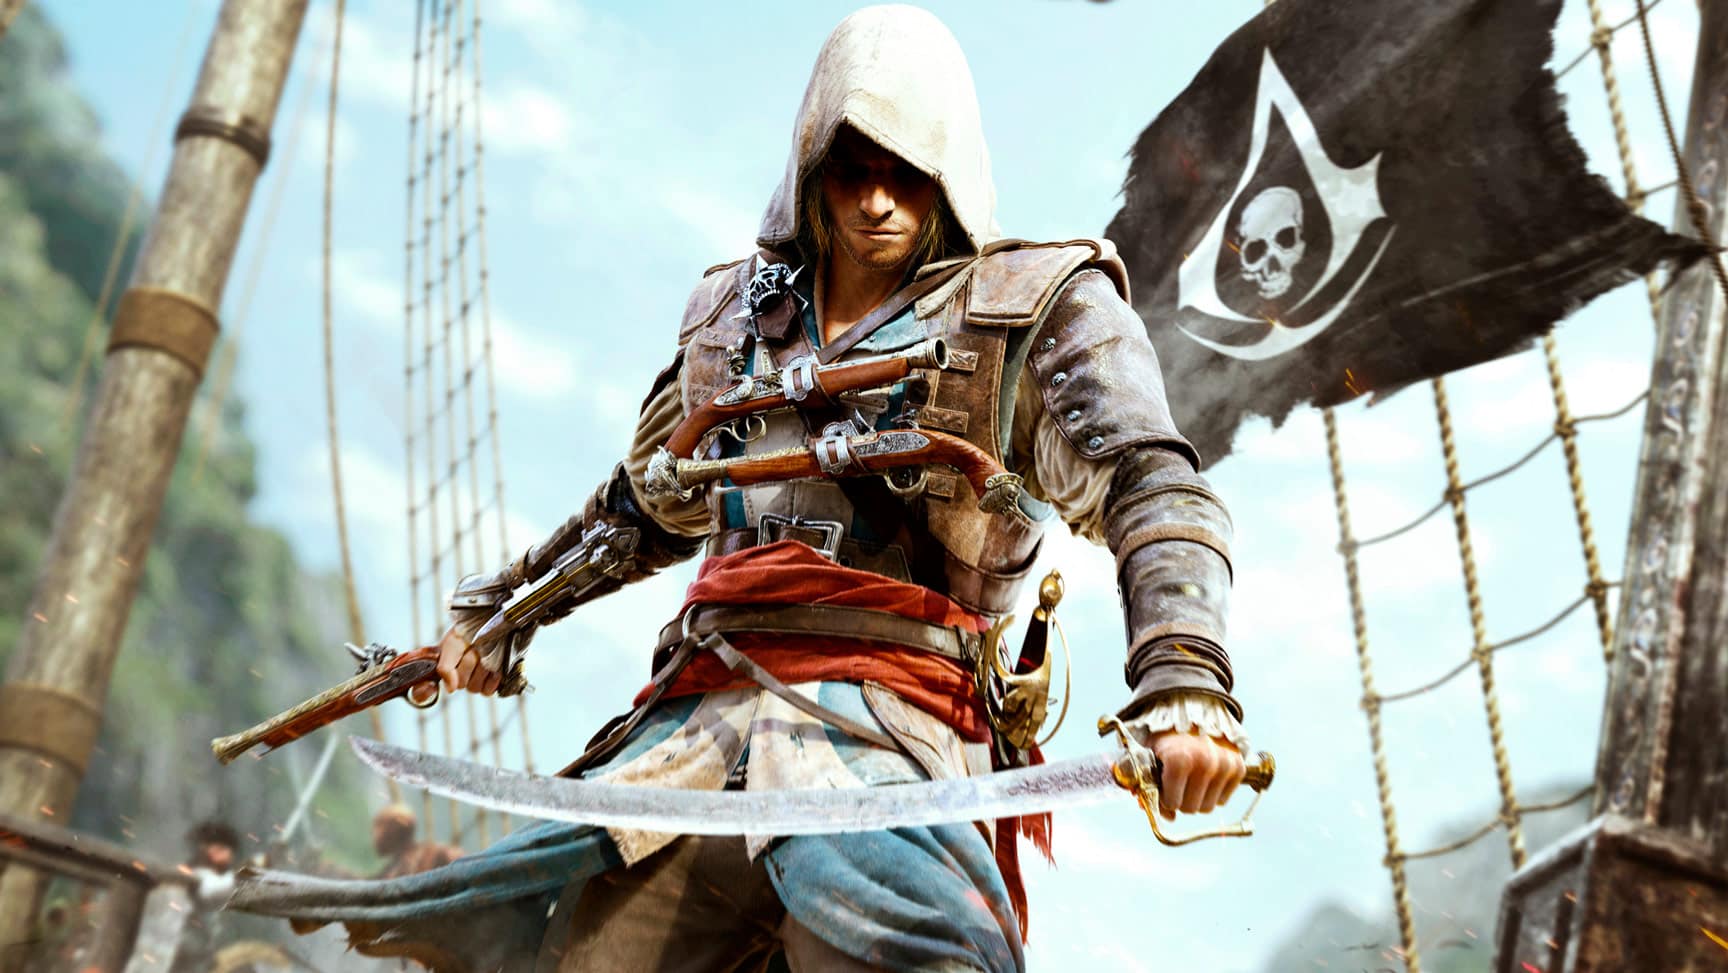 Todos os Videojogos - Assassin's Creed - Assassin's Creed 